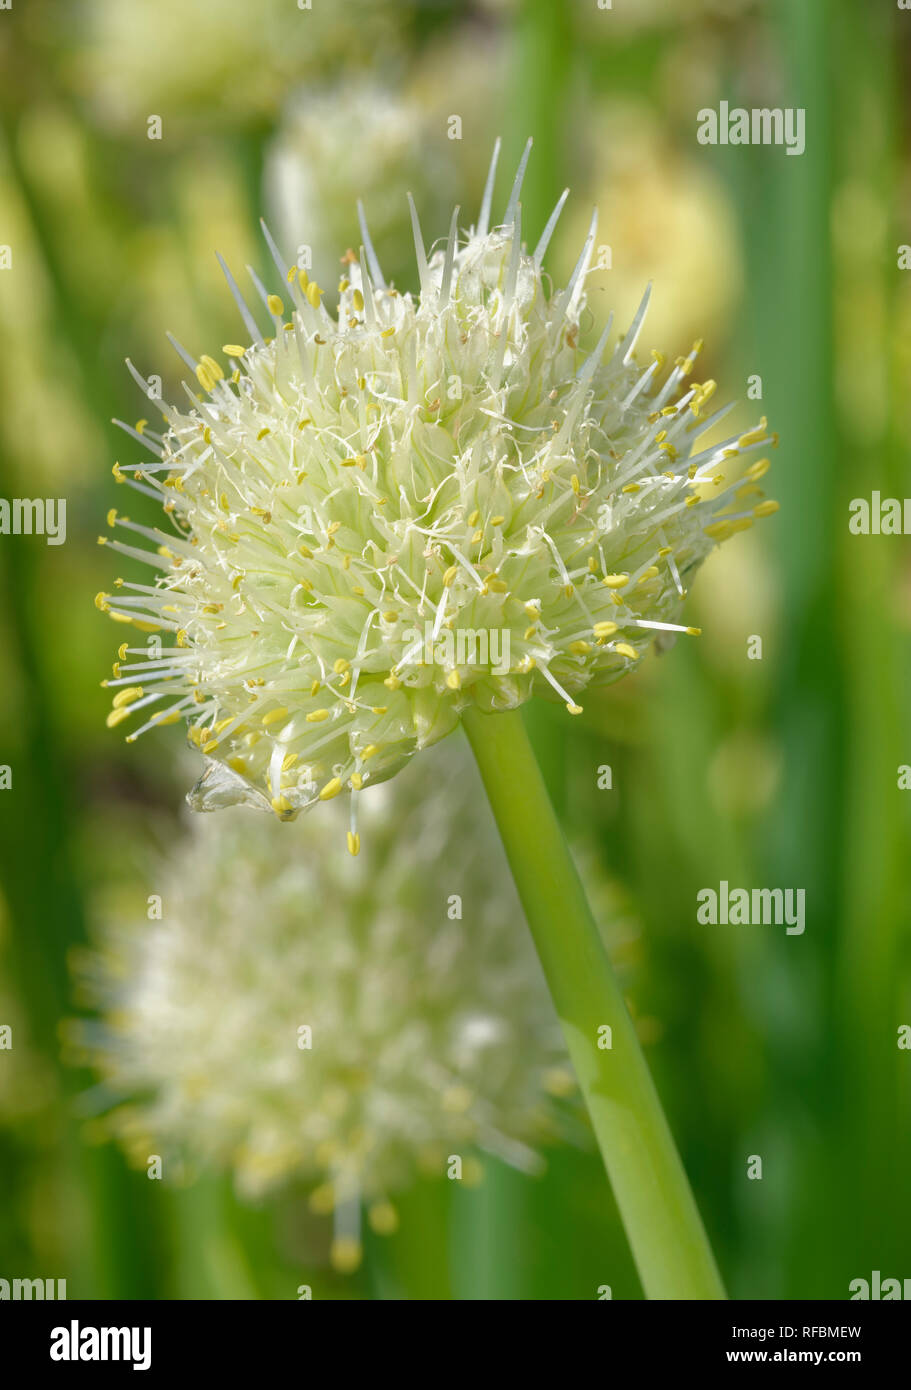 Welsh or Spring Onions - Allium fistulosum  Flower Stock Photo